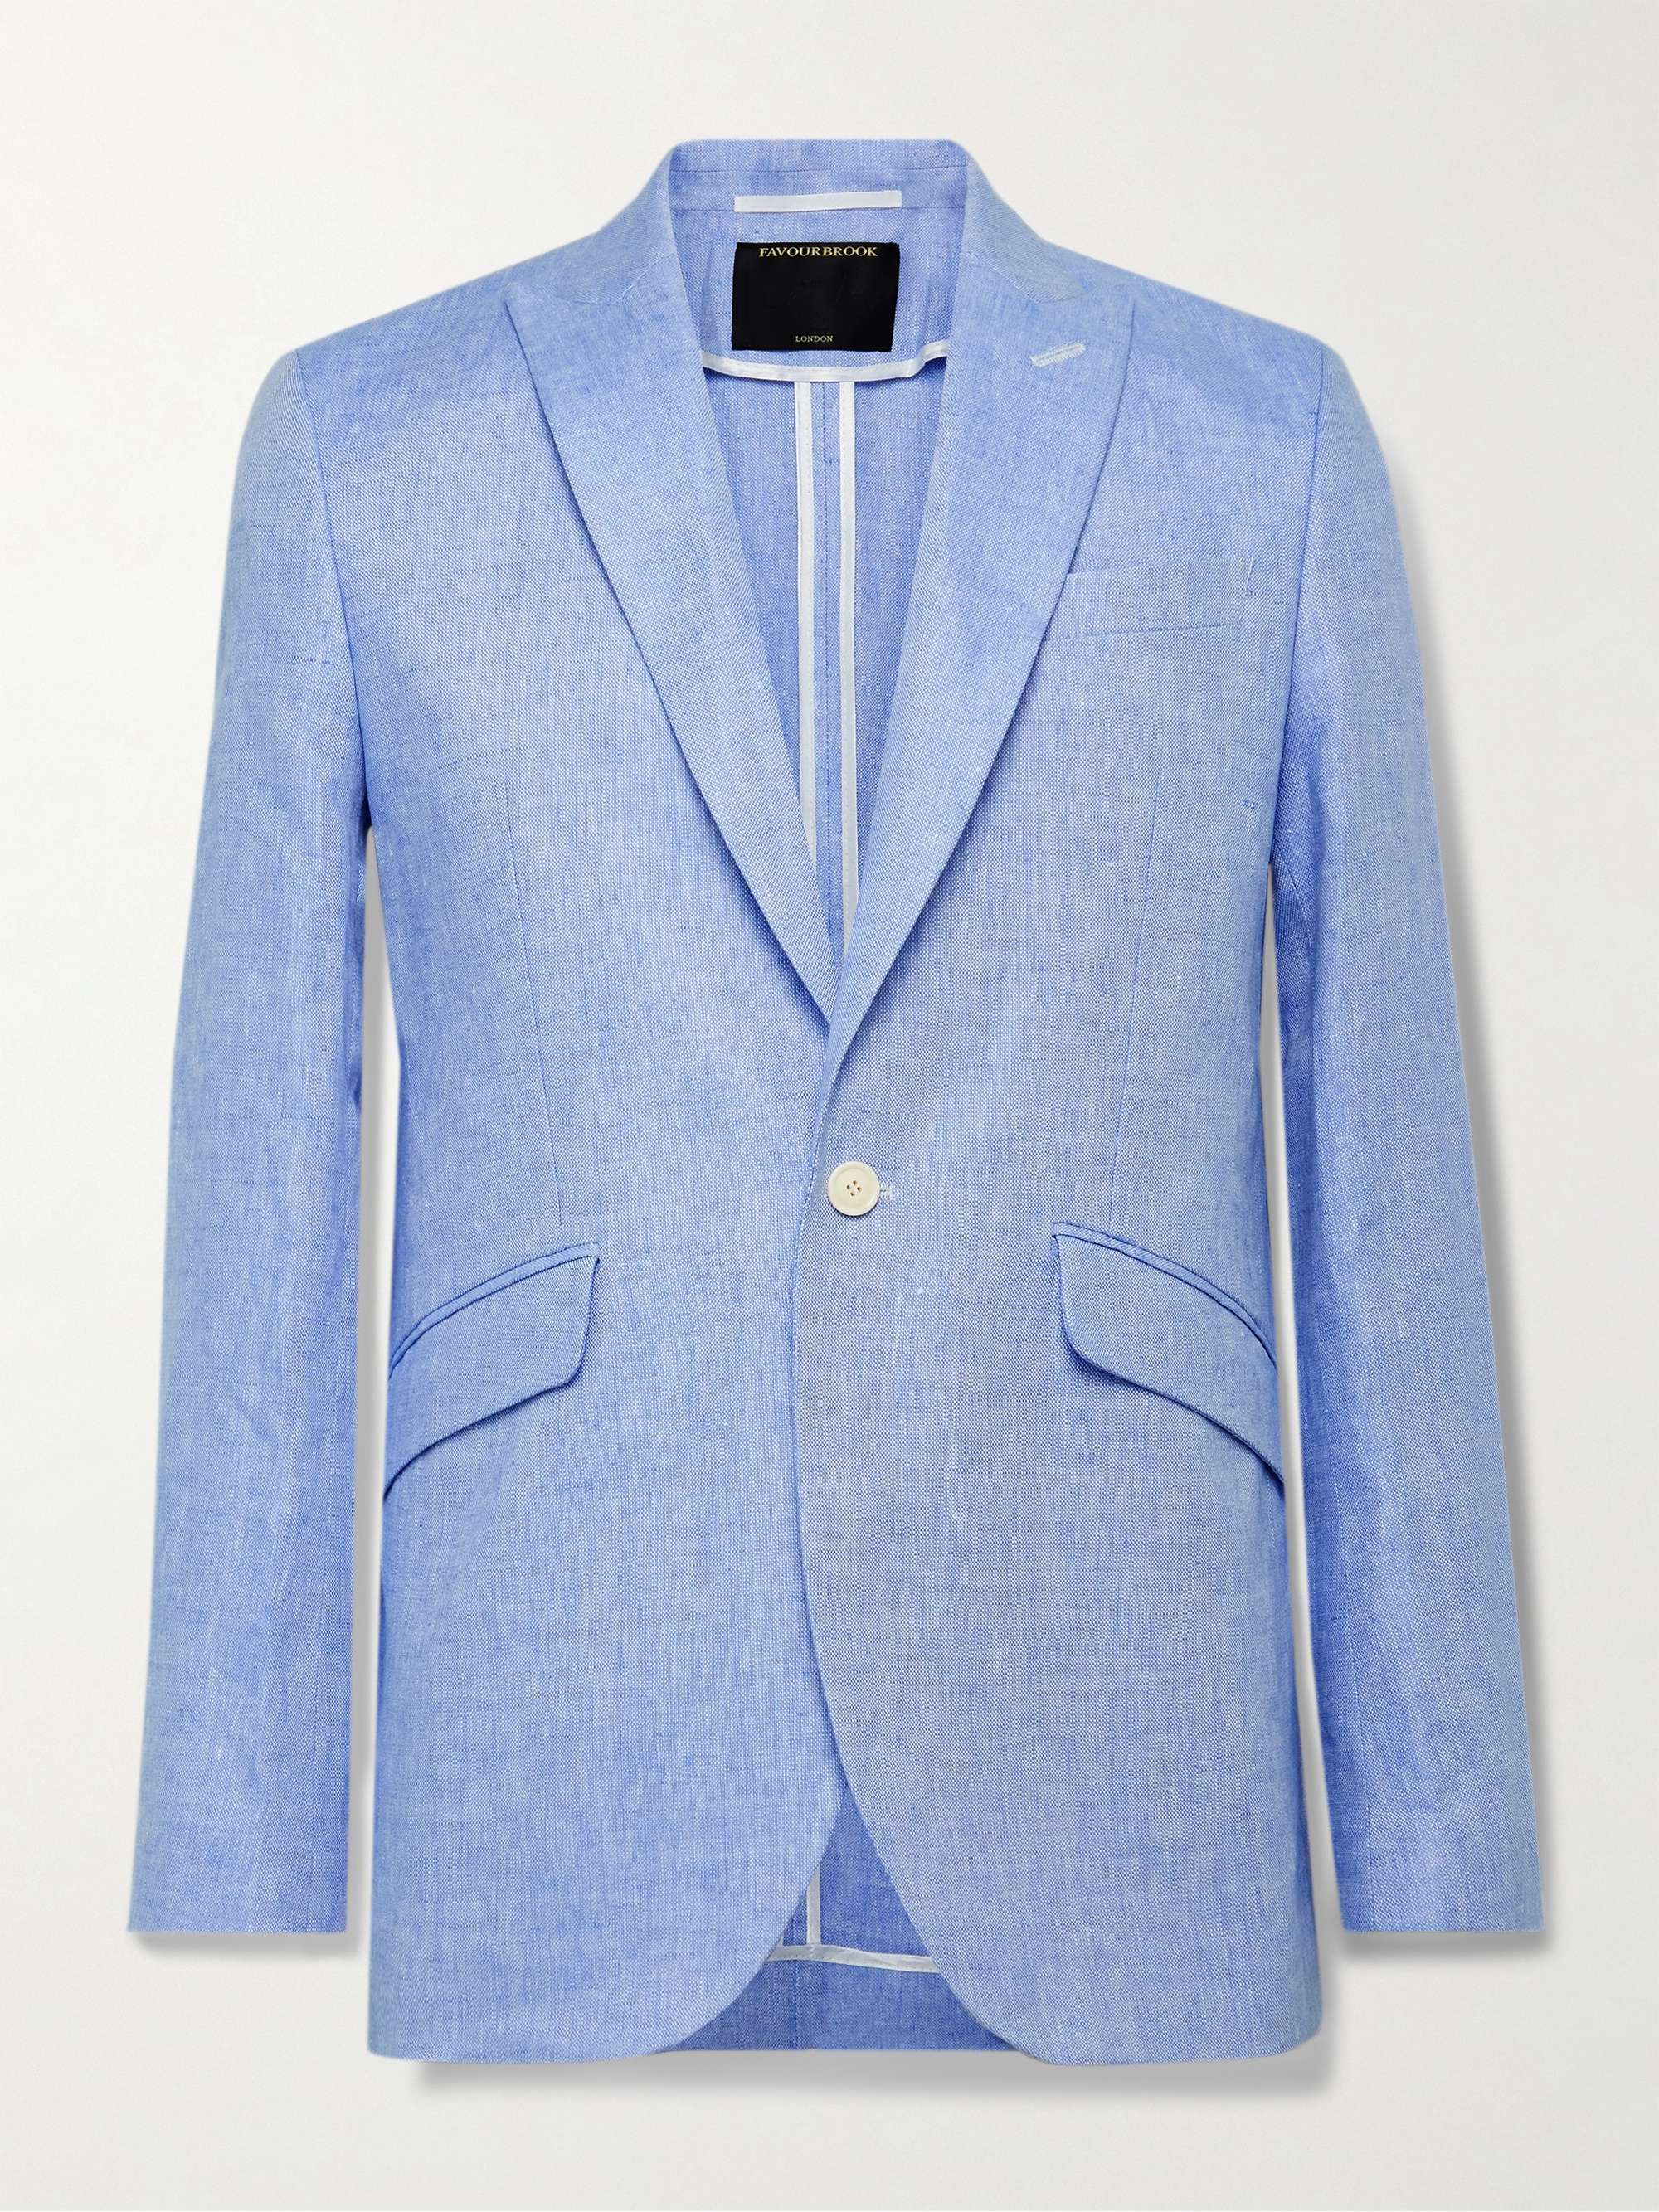 FAVOURBROOK Ebury Slim-Fit Linen Suit Jacket for Men | MR PORTER